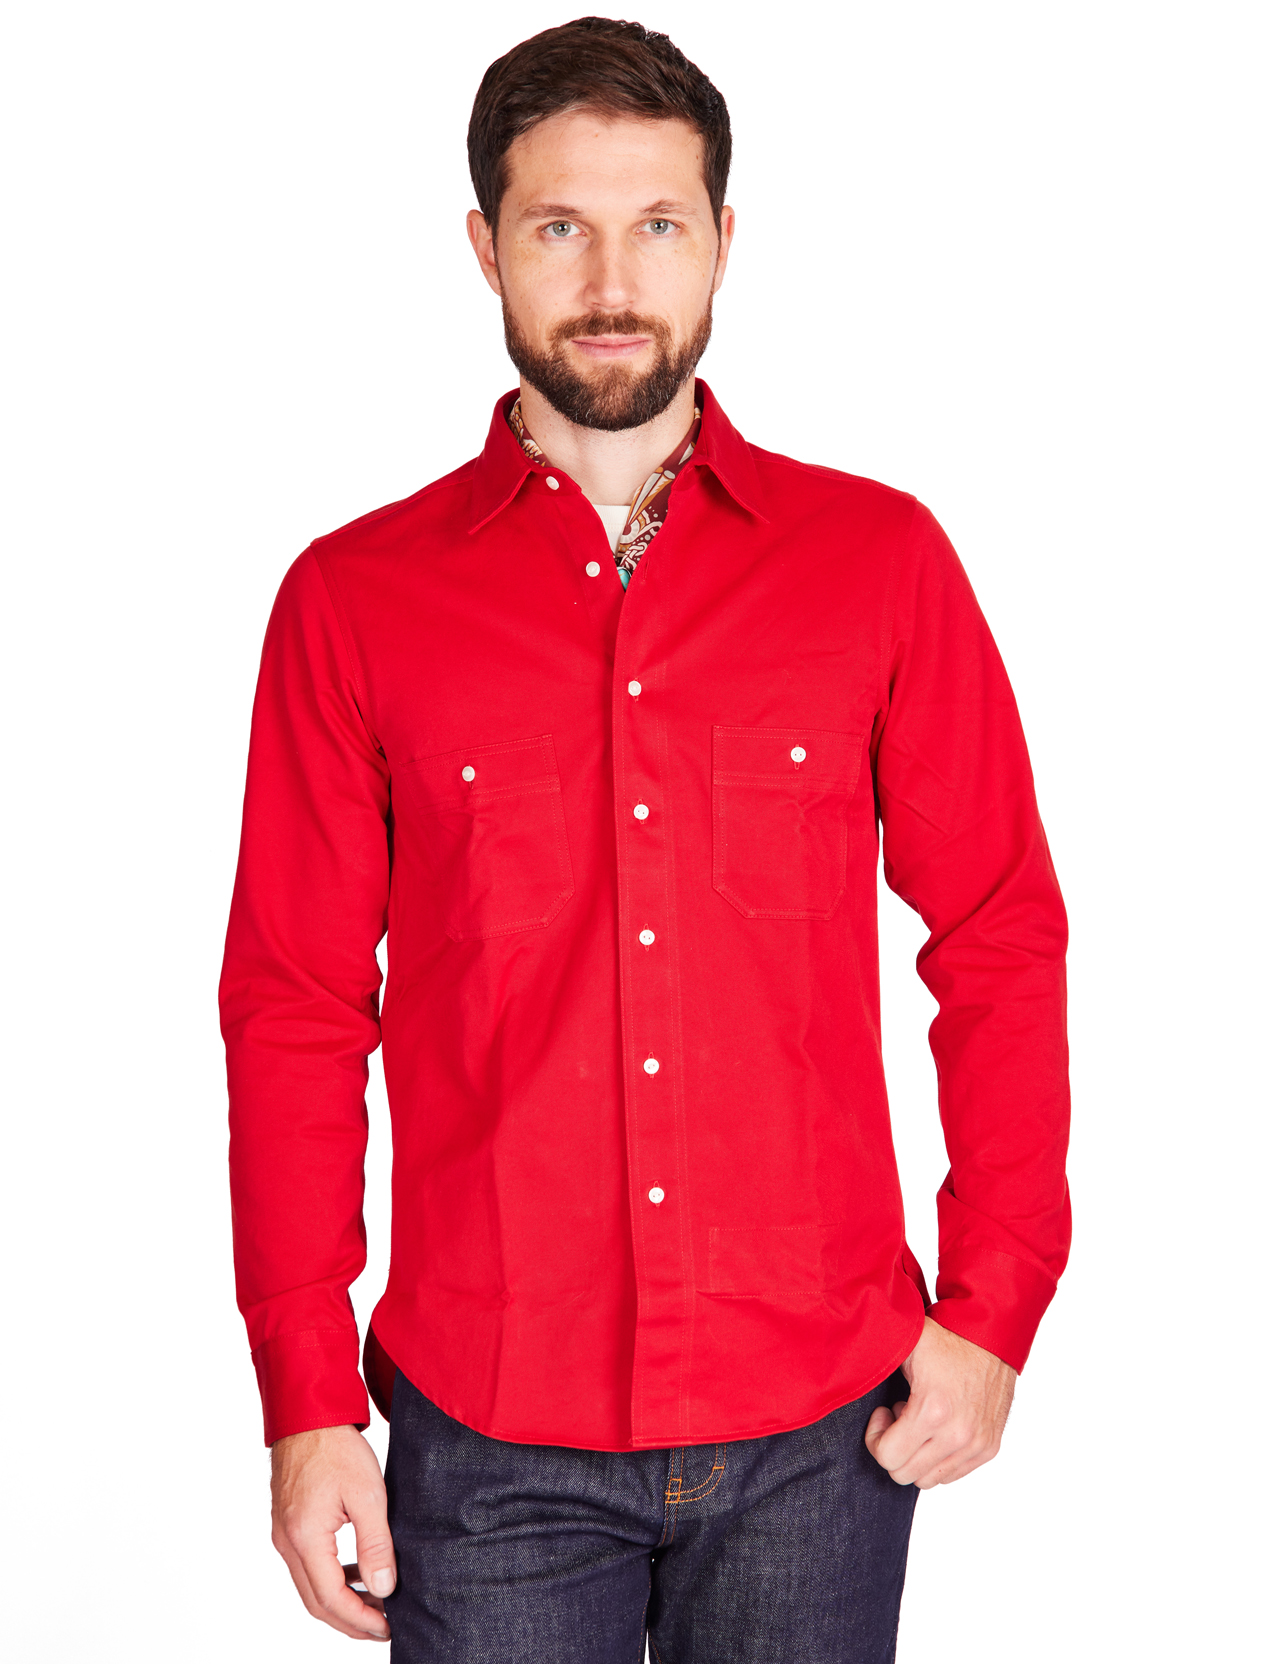 Blue Blanket - Cowboy Guide Shirt - Red